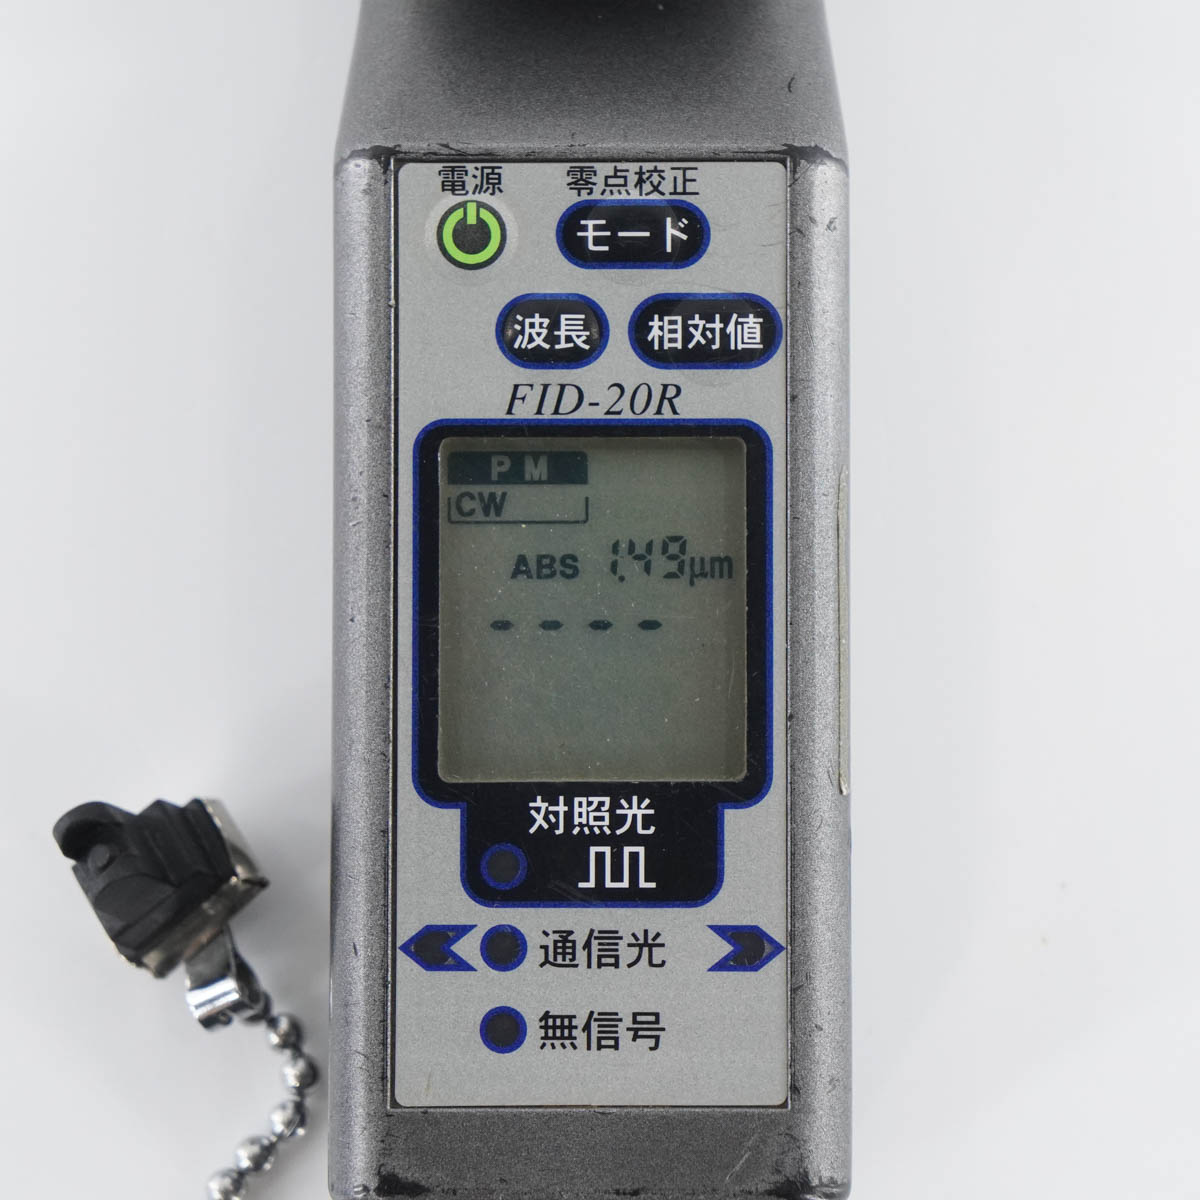 DW]USED 8日保証 セット 06/2020CAL Fujikura FID-20R ID-SS3W 光